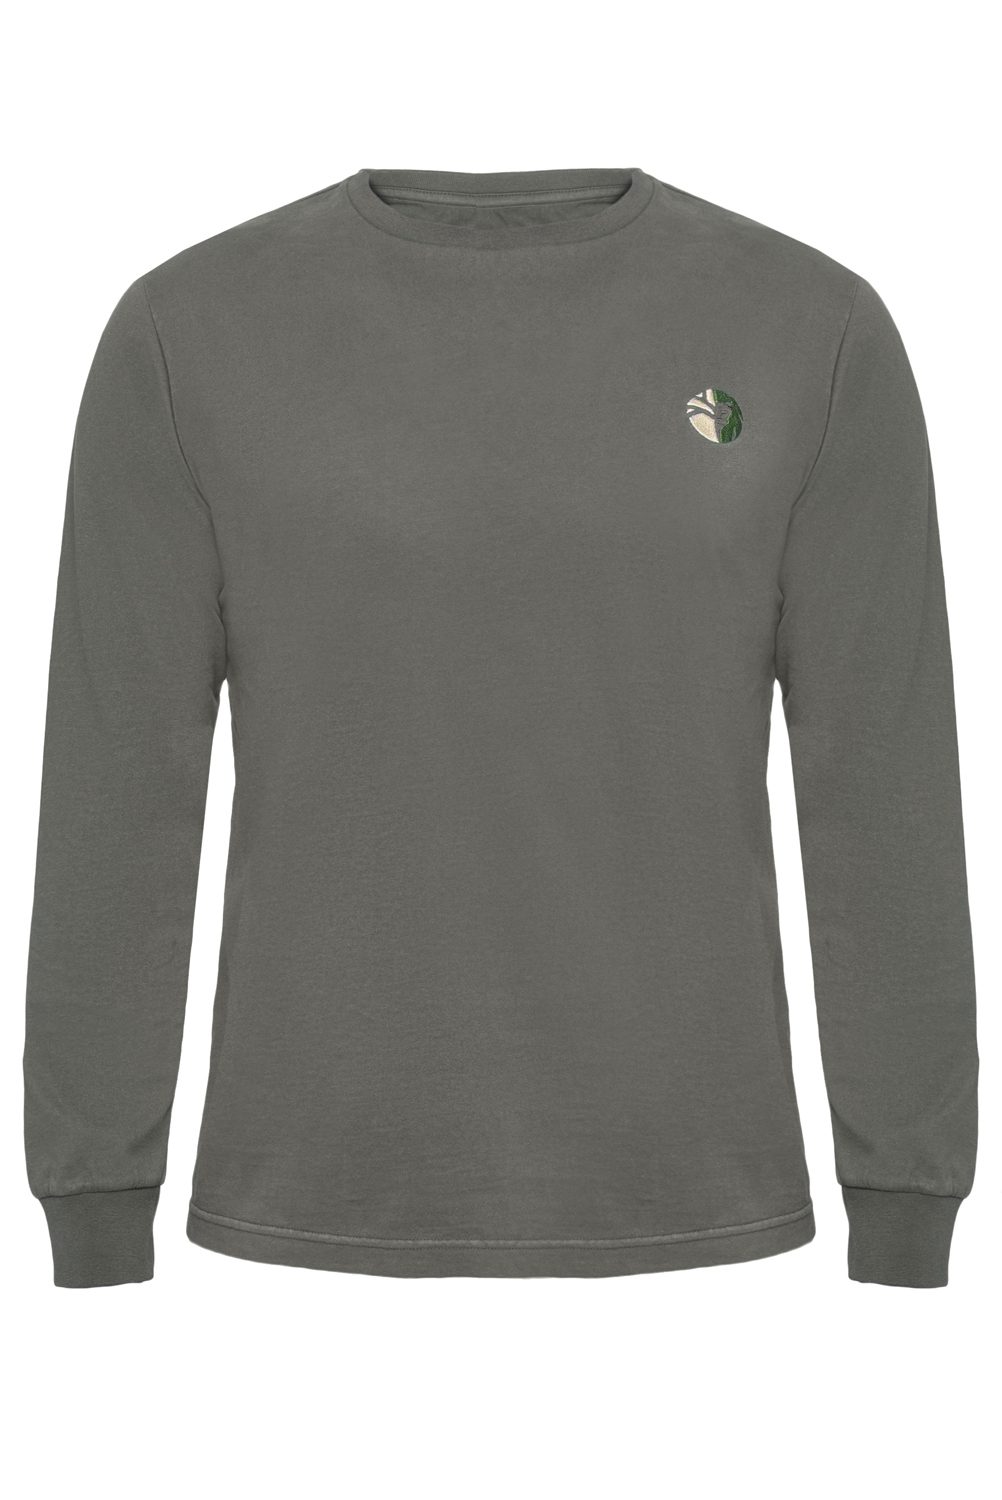 Kilimanjaro Gris - T-shirt manches longues 100% Coton BIO